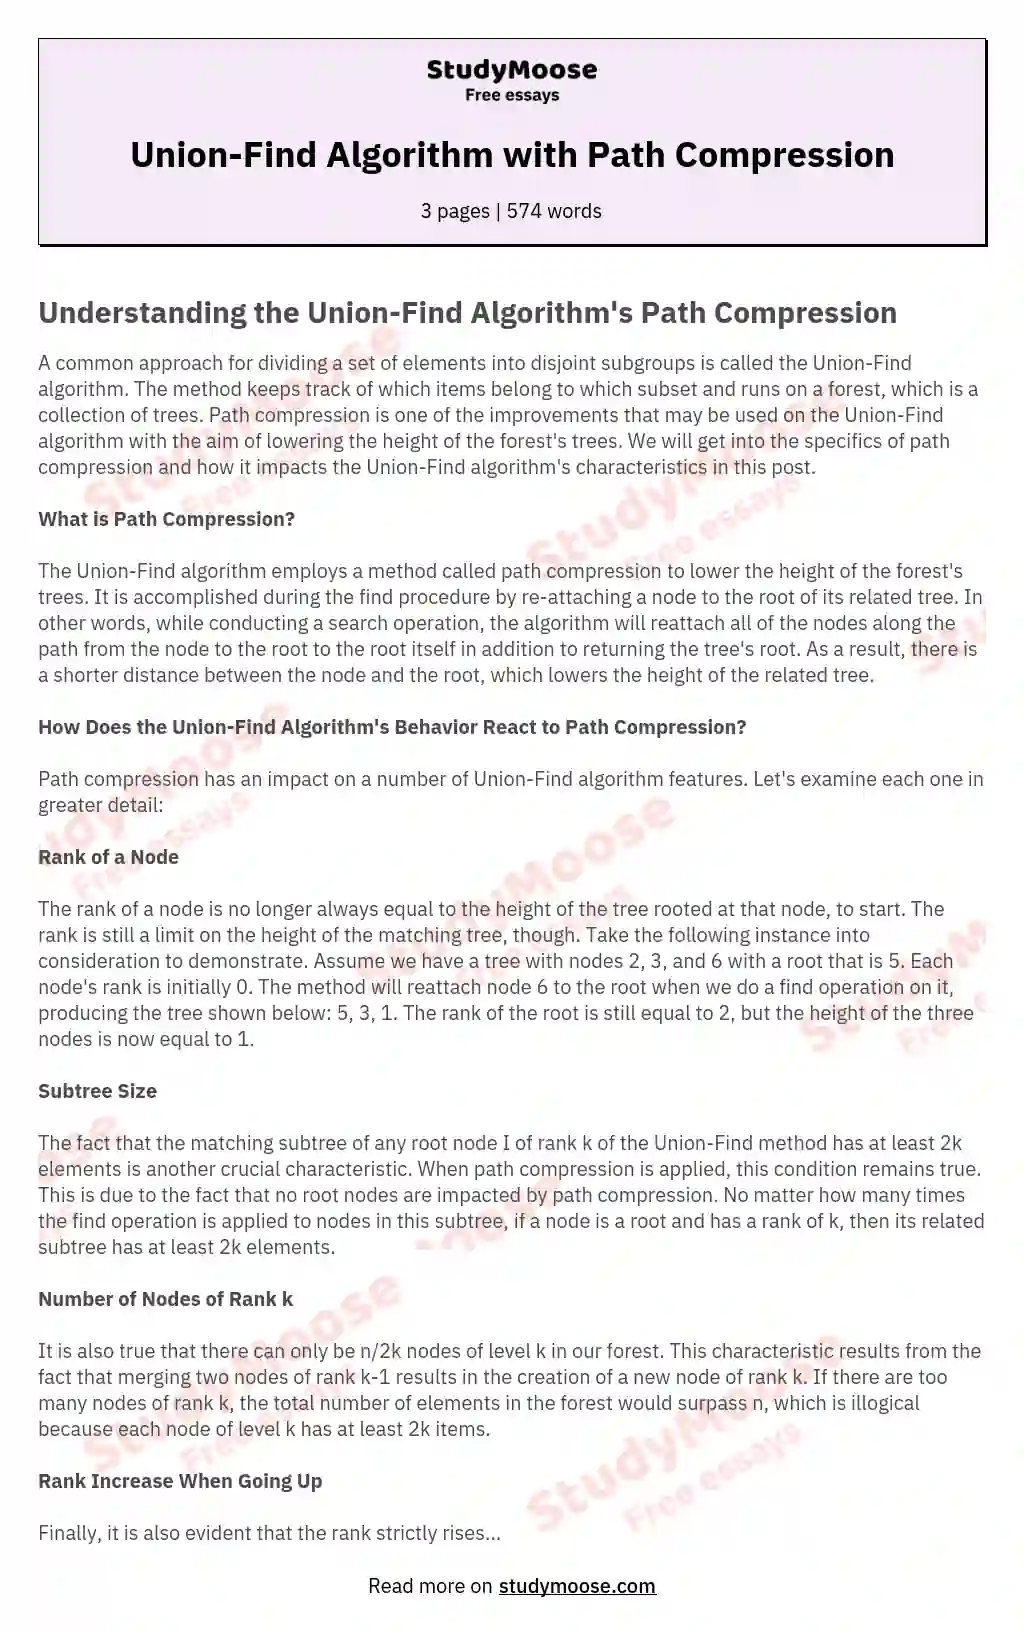 Union-Find Algorithm with Path Compression essay